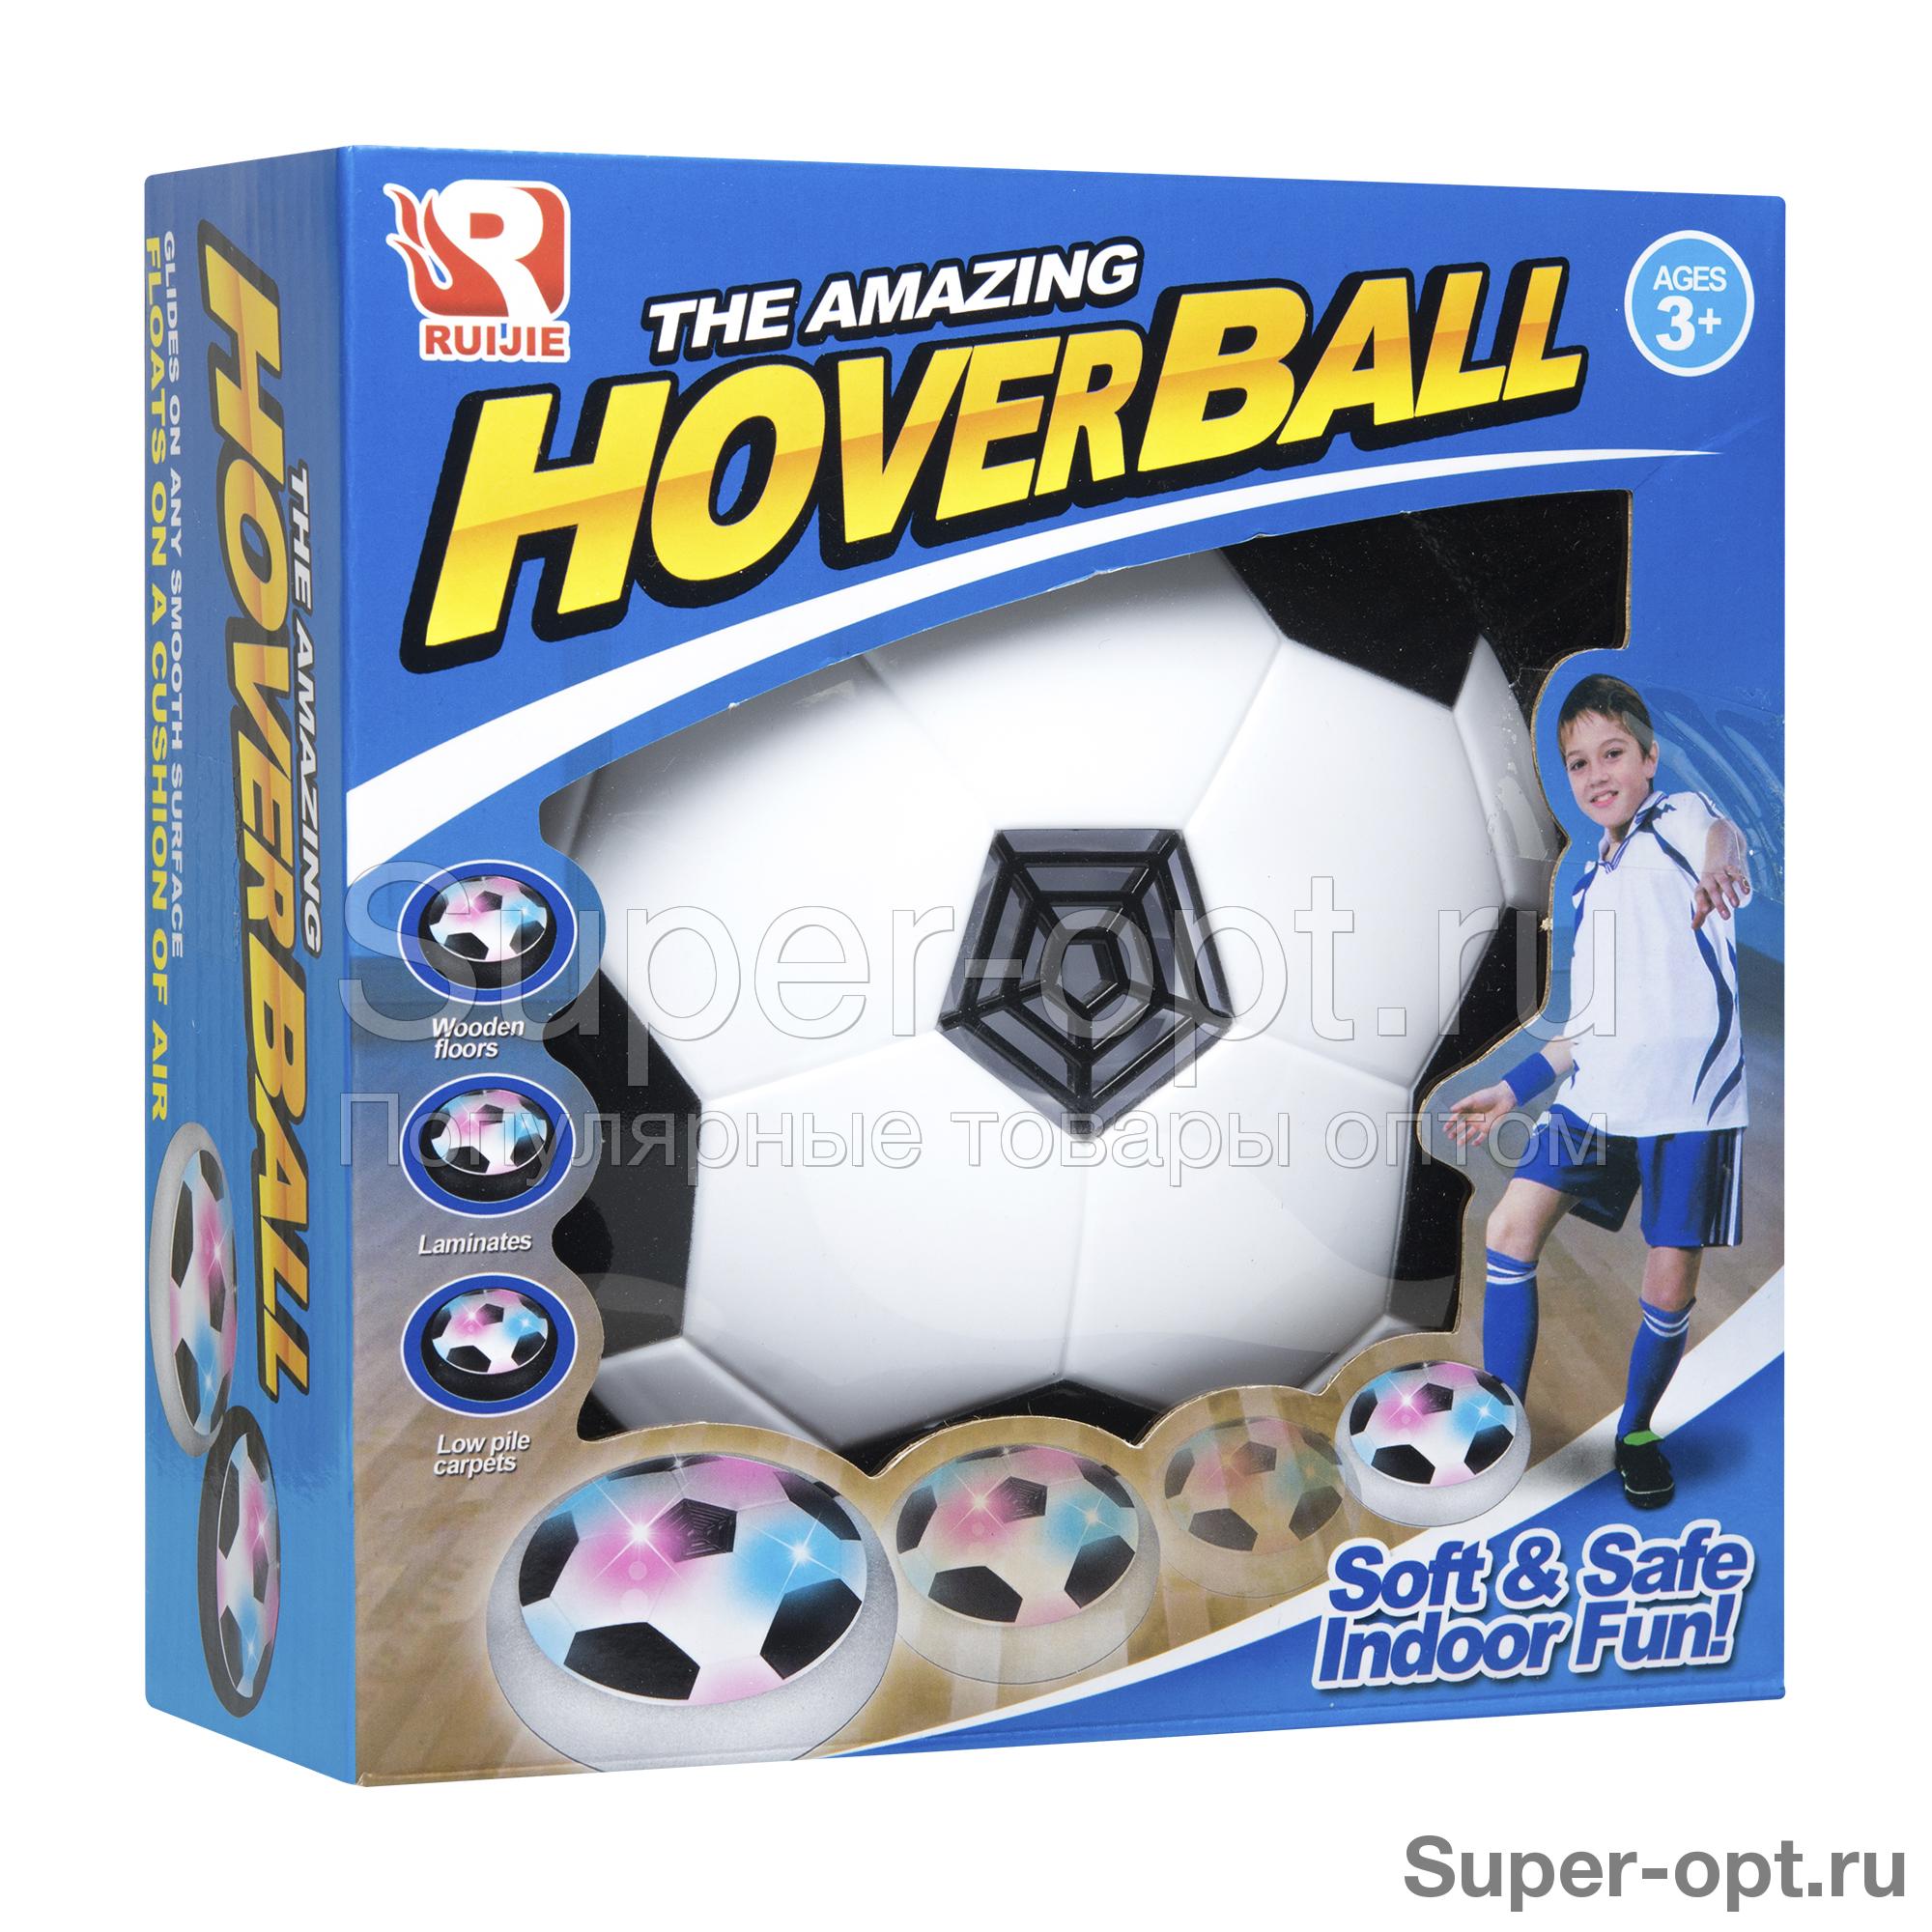 Hover Ball – футбольный мяч для дома